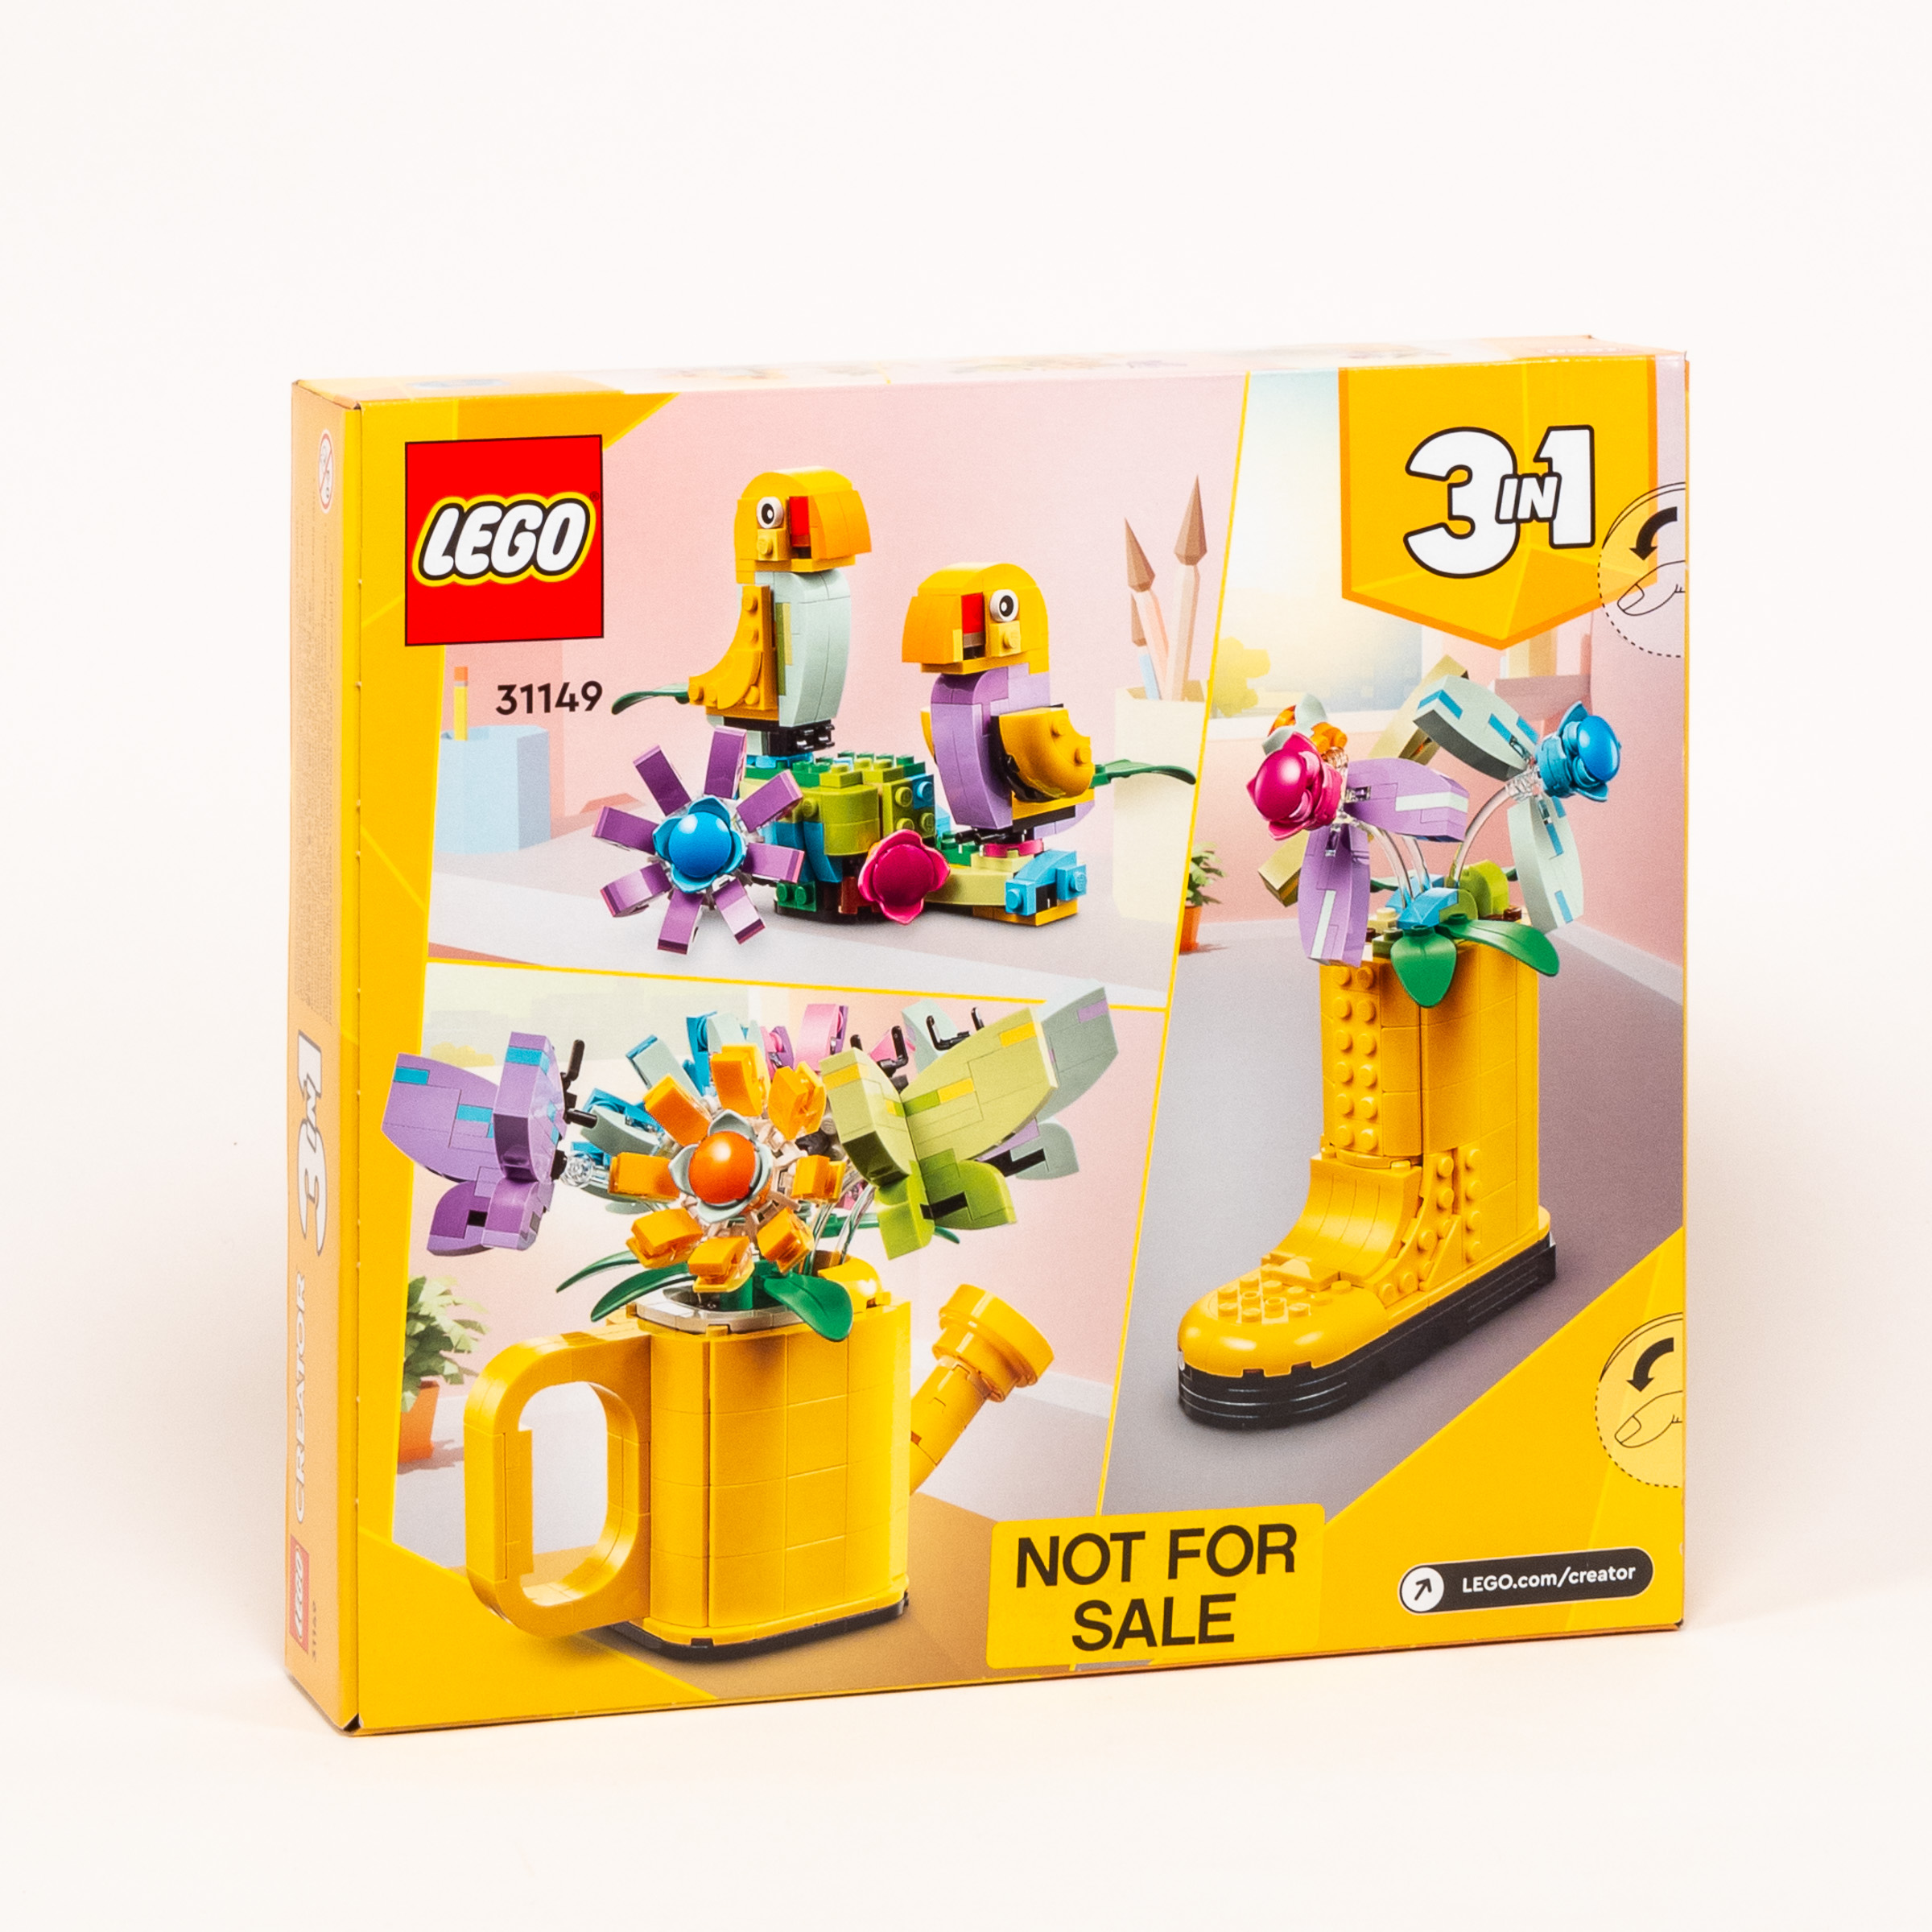 LEGO Creator 3-in-1 31150 Wild Safari Animals [Review] - The Brothers Brick